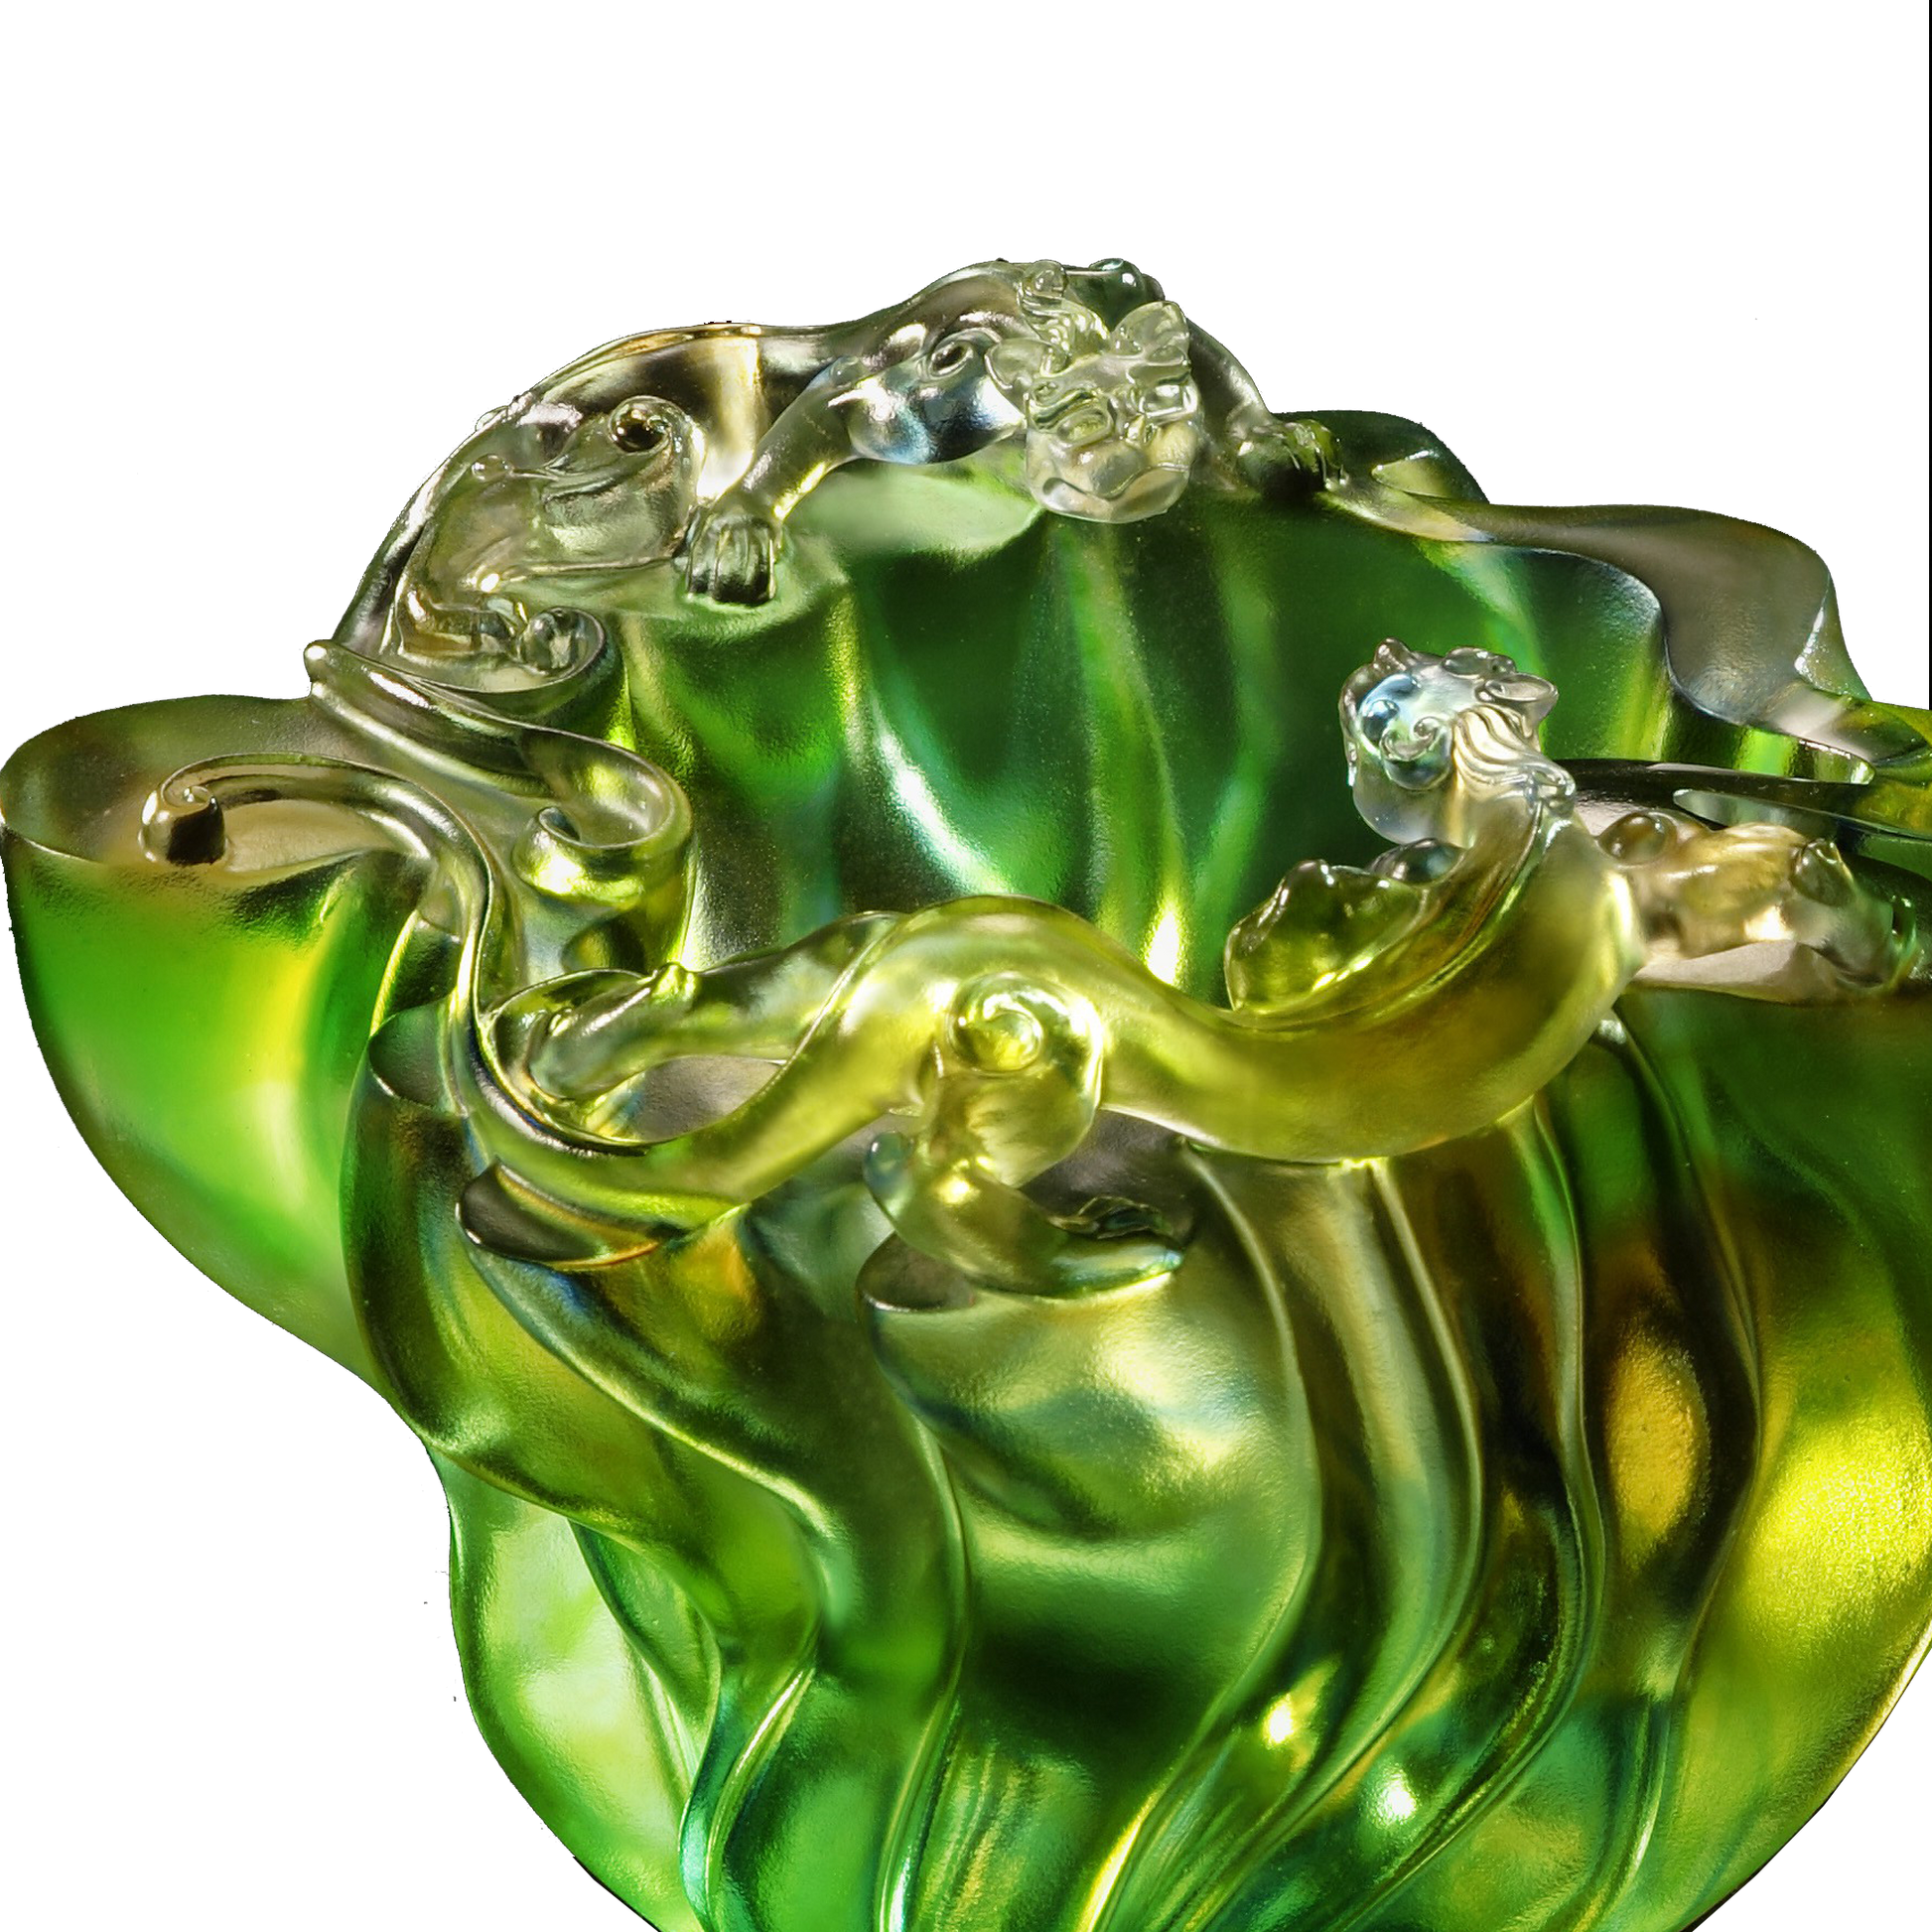 Joyous Rendezvous (Friendship) - Chilong Mythical Creature - LIULI Crystal Art